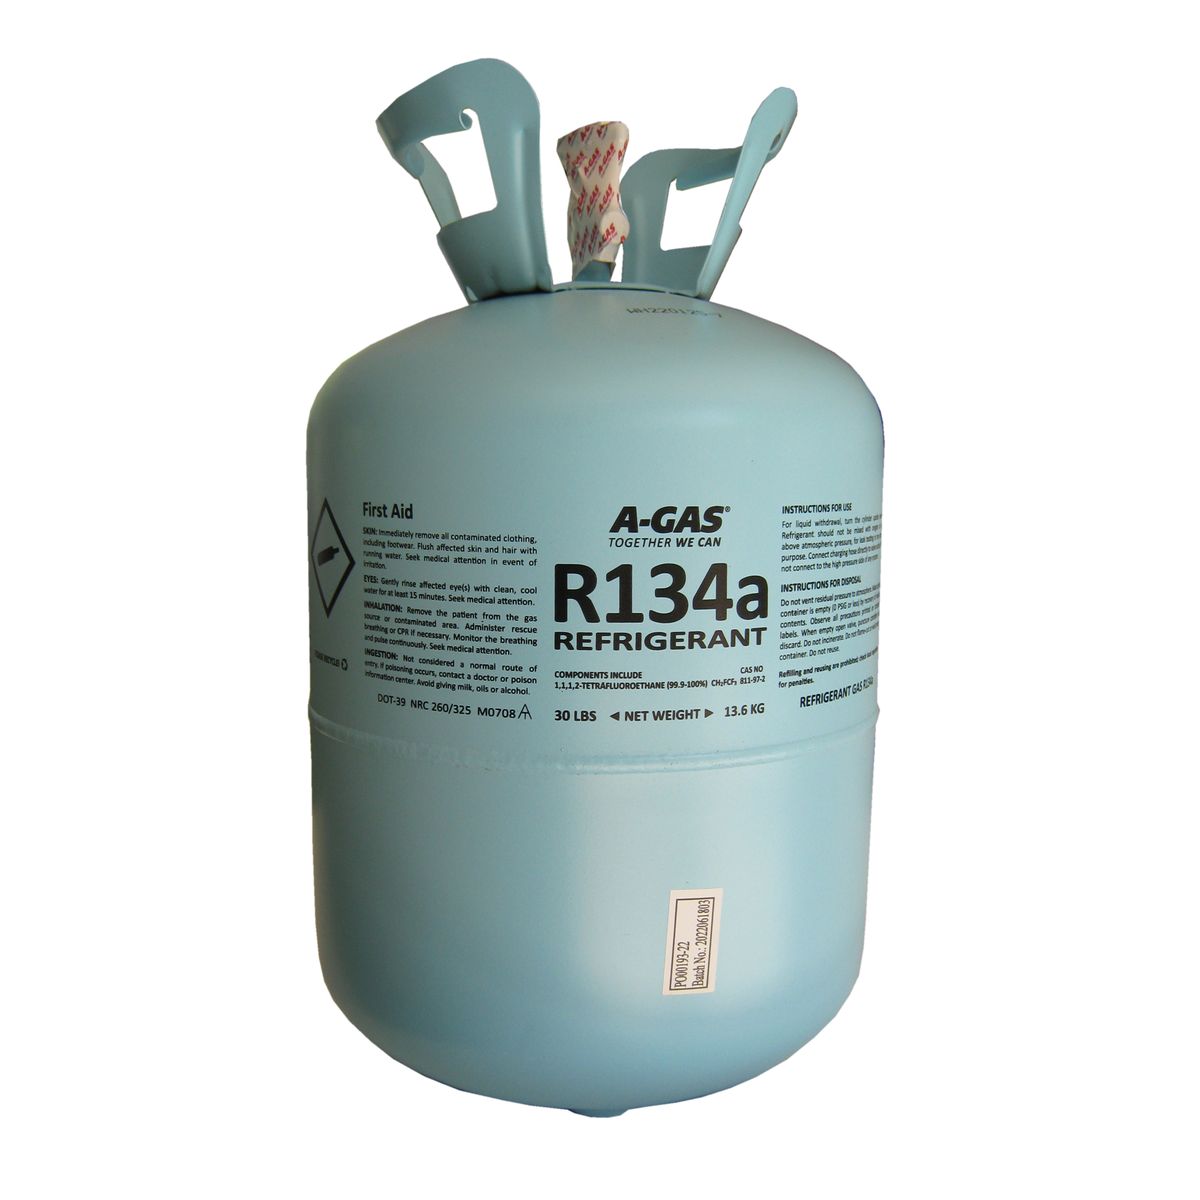 Klingshield Refrigerant Gas Cylinder - R134a (13.6 kg)